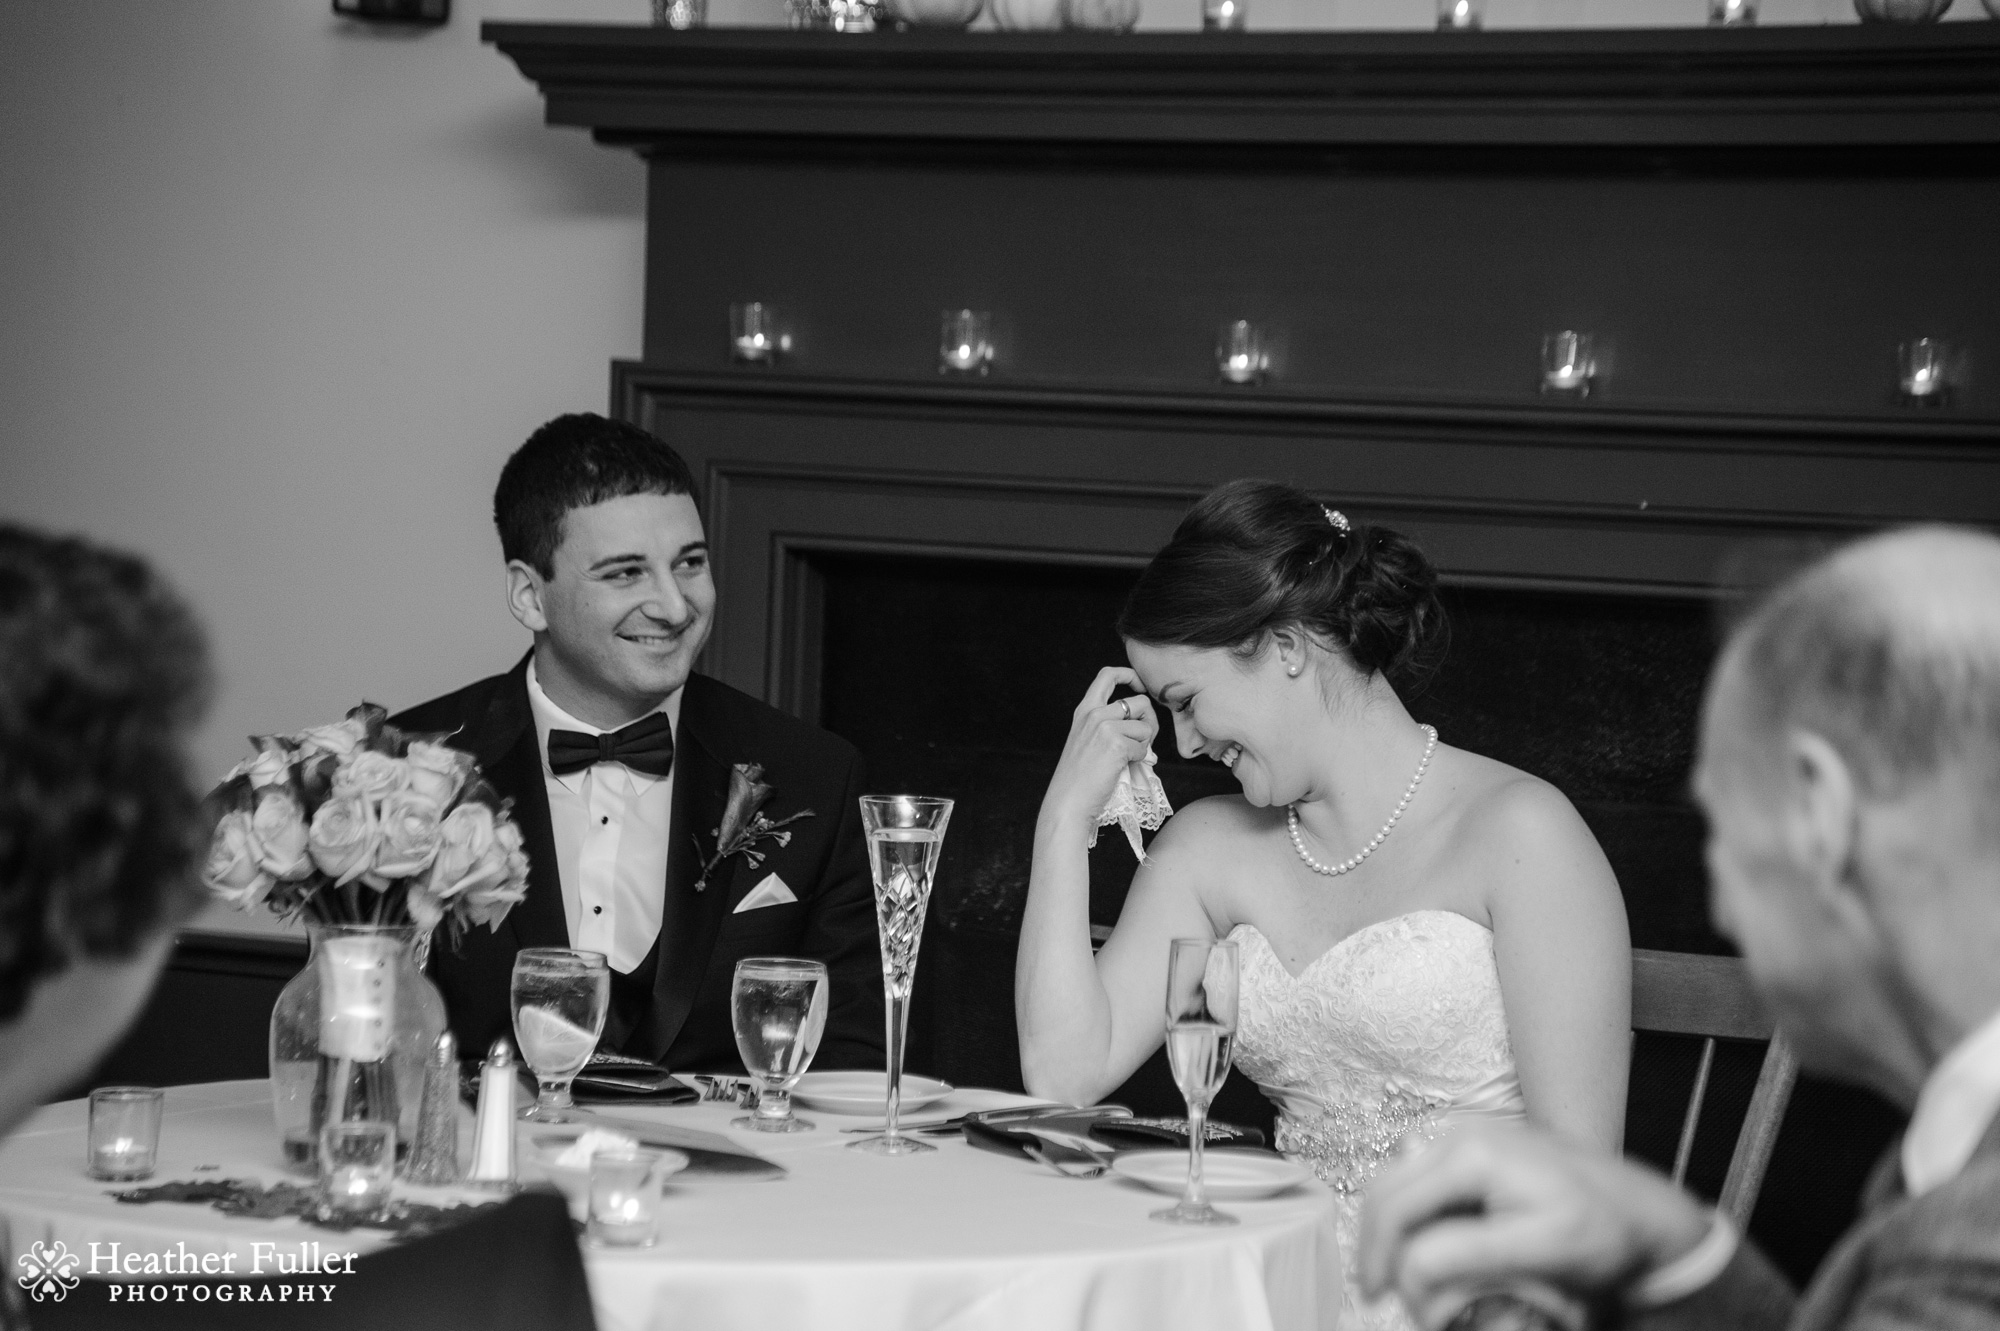 old_sturbridge_village_wedding_photographer_oliver_wight_tavern_reception_toast_reaction_